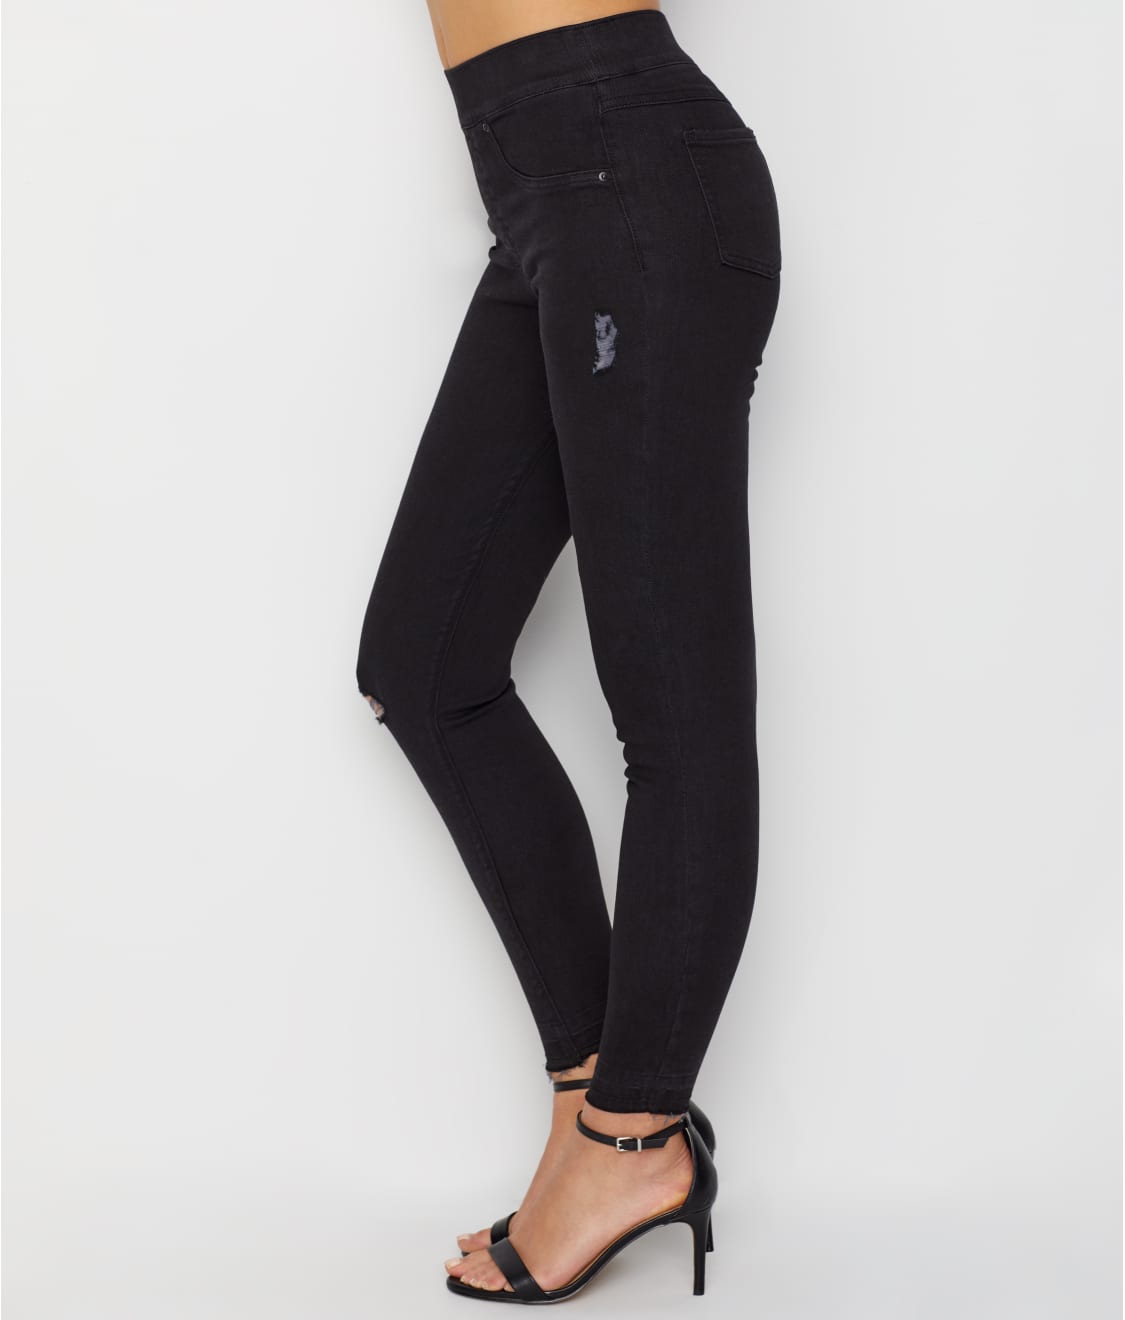 Naliha Women Denim Look Pants Fake Distressed Low Rise Stretch Skinny Jeans  Leggings Black One Size at Amazon Women's Jeans store